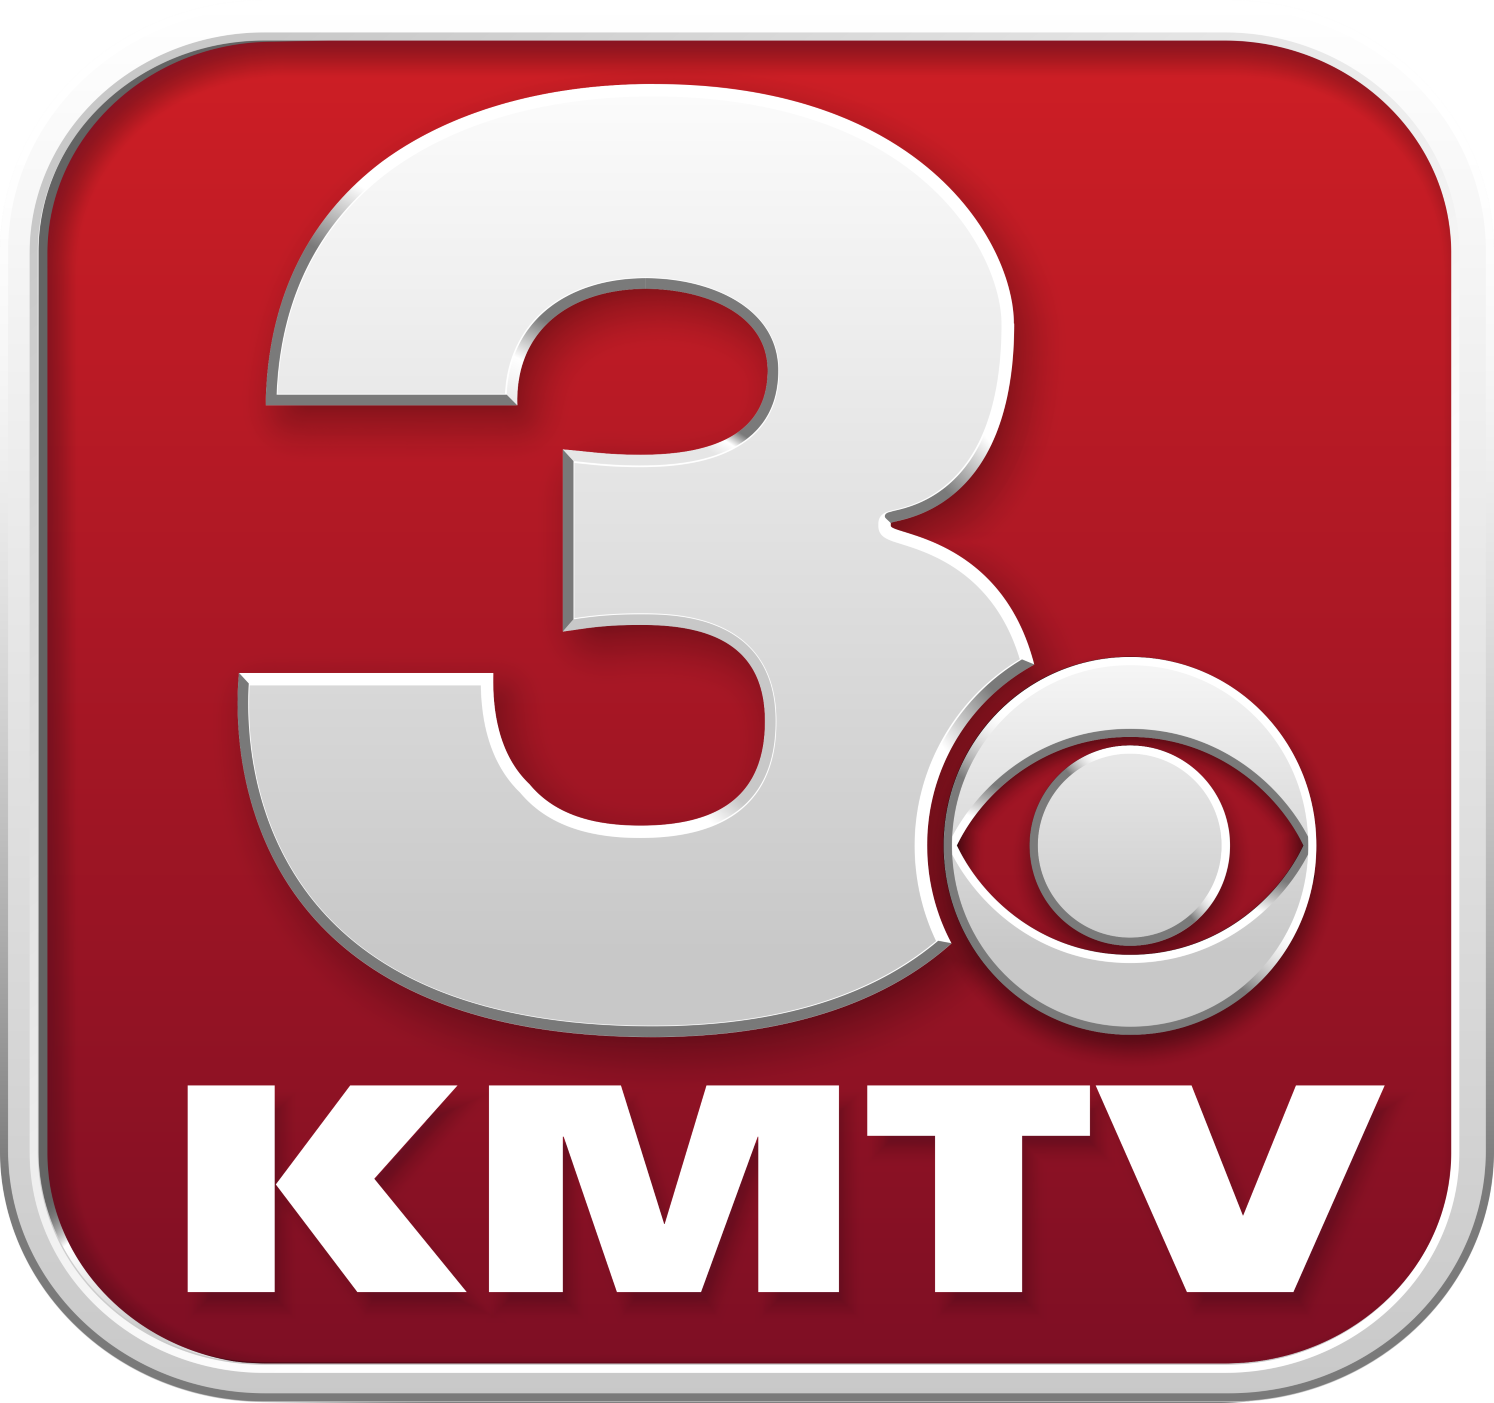 KMTV 3 News Now